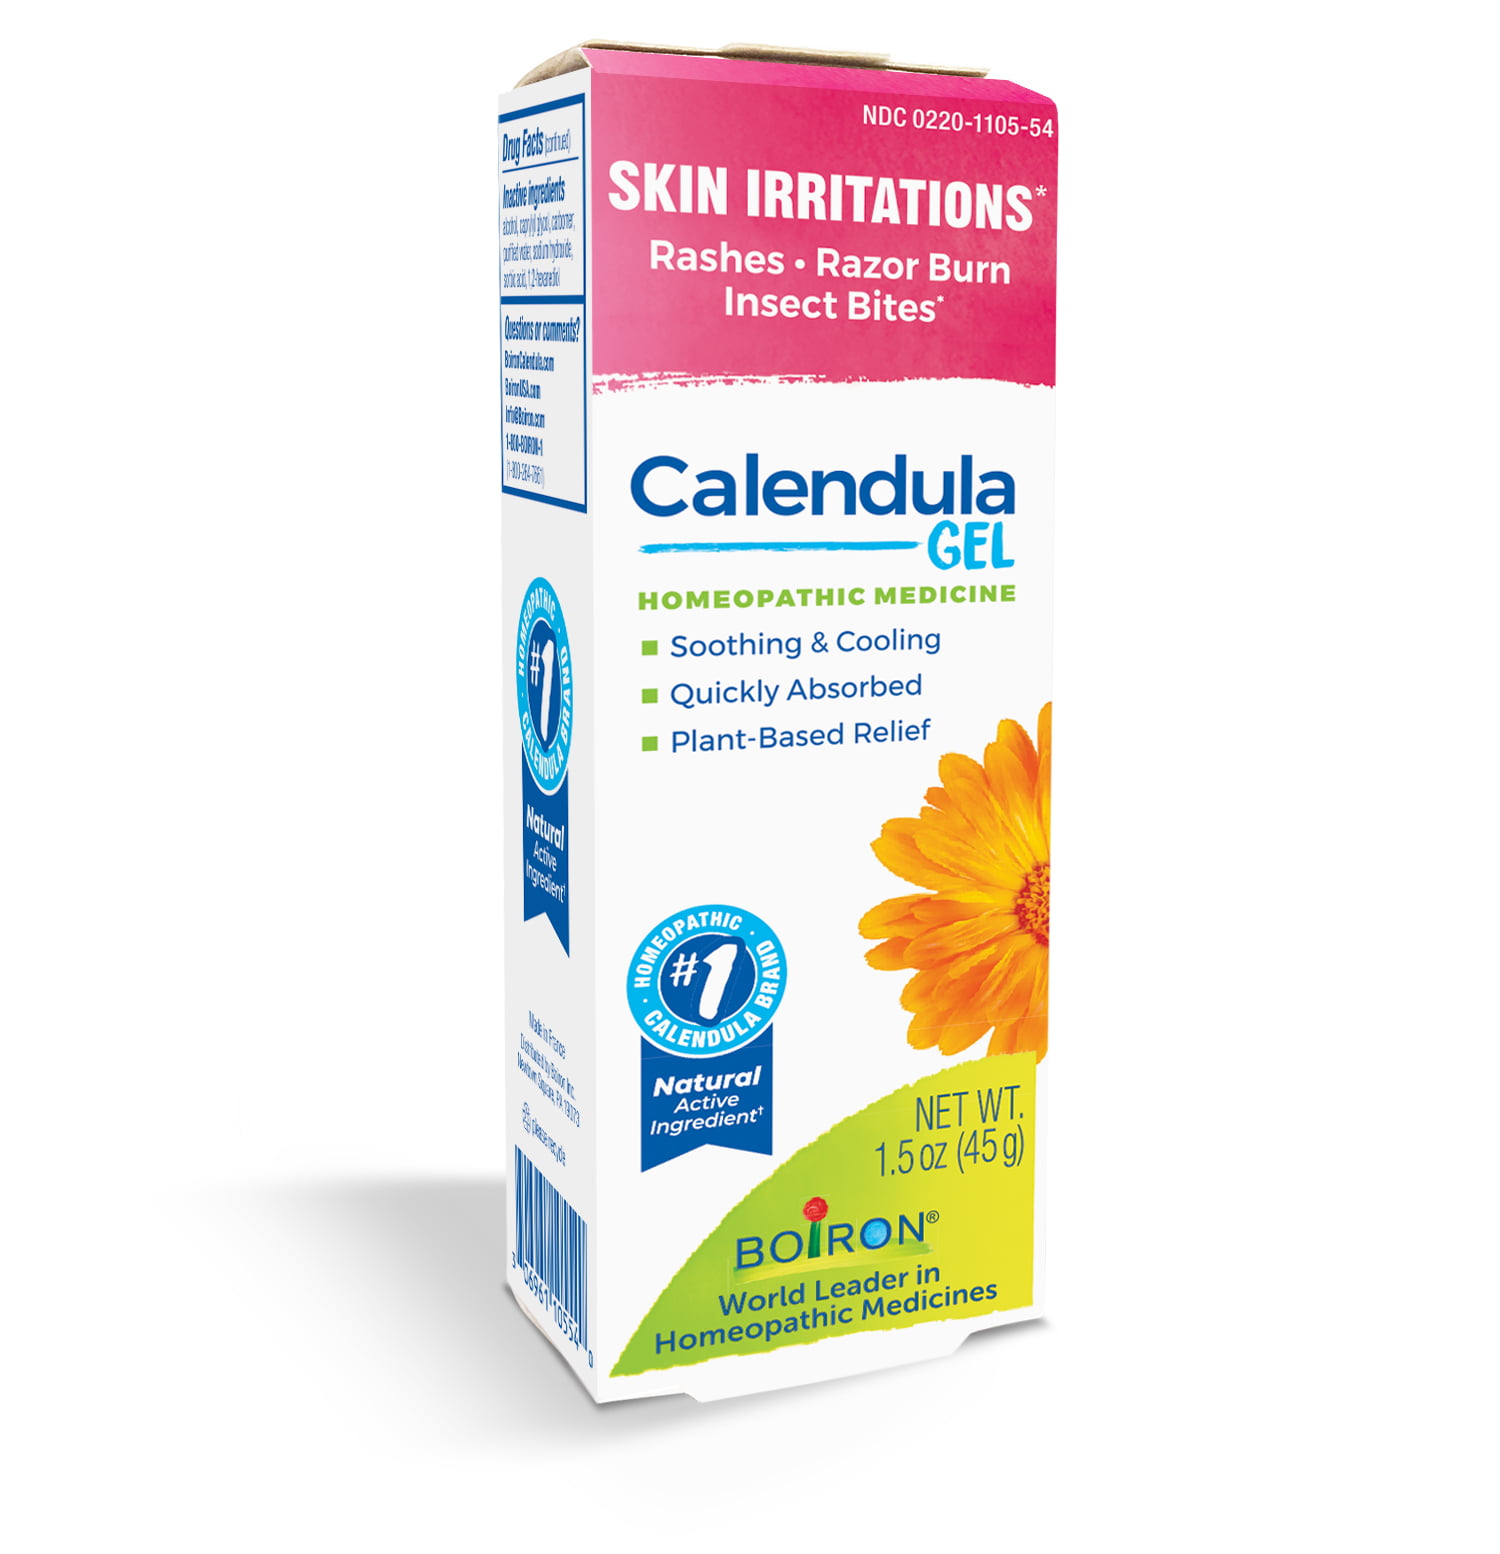 Boiron Calendula Gel, Homeopathic Medicine for Skin Irritations, Rashes,  Razor Burn, Insect Bites Relief,  oz 